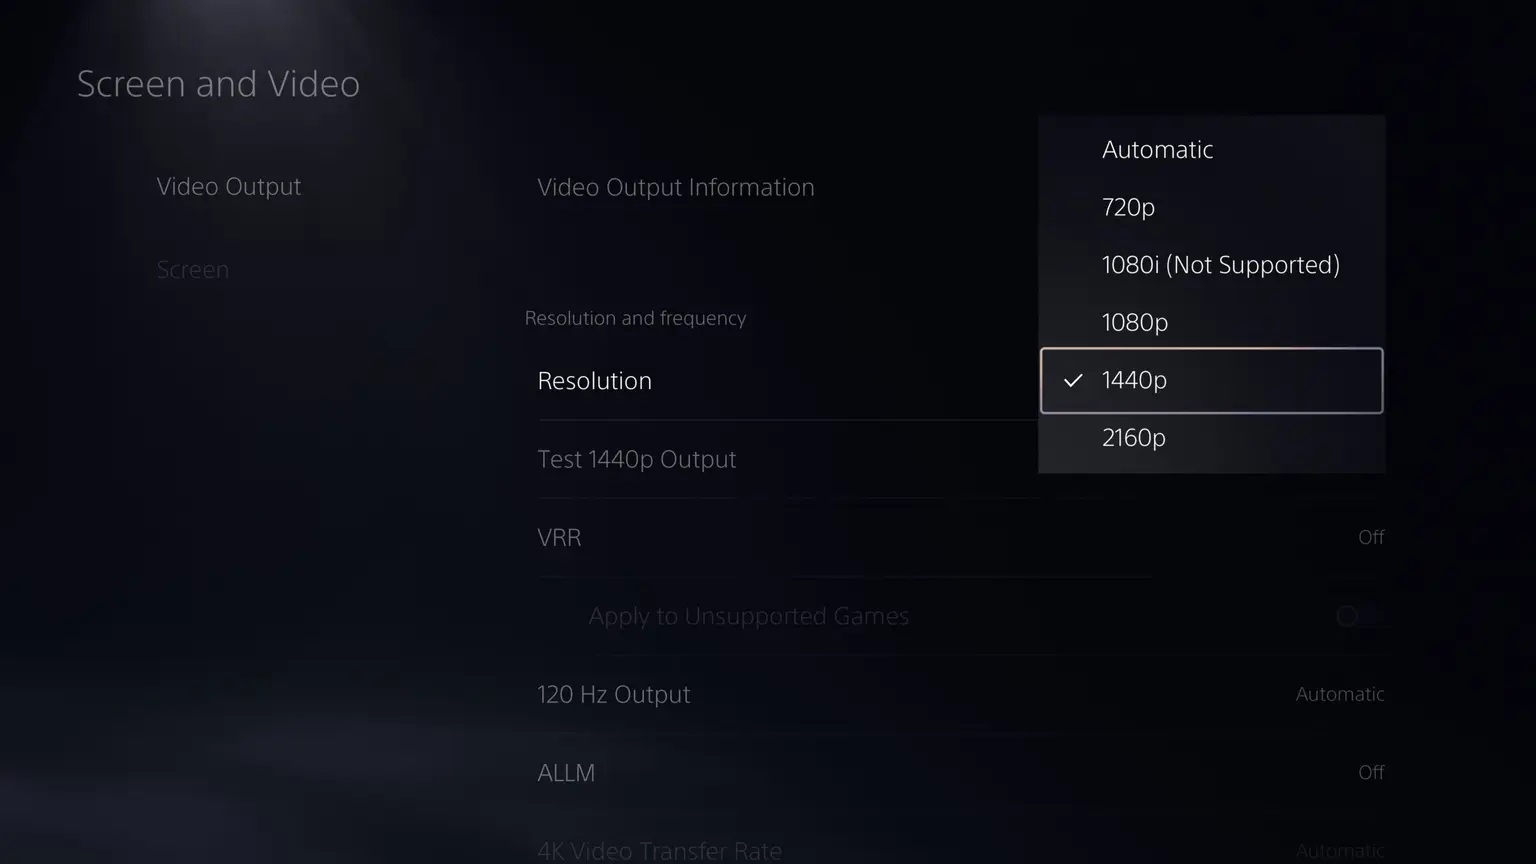 PS5 firmware beta opzione 1440p